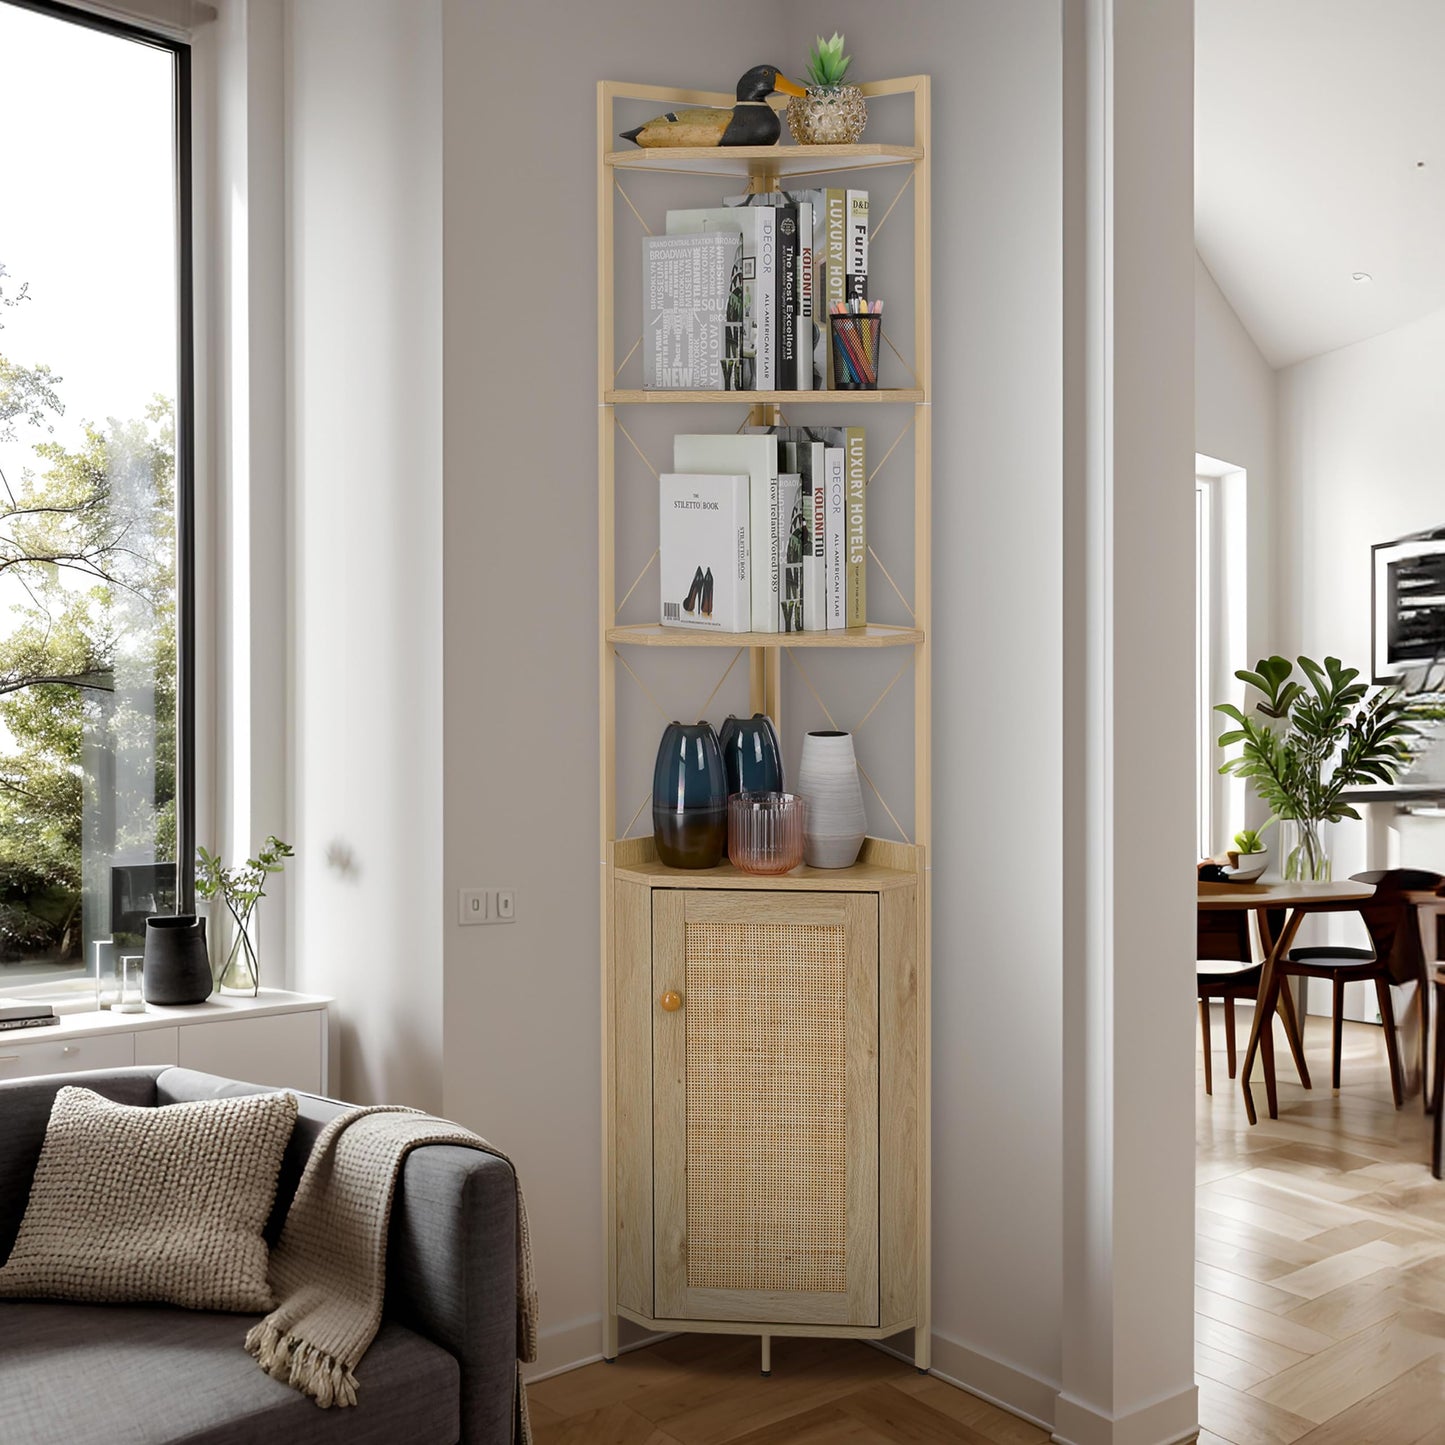 Finnhomy Corner Shelf with Cabinet, 71 Inches Multipurpose Corner Cabinet with Rattan Decorated Doors, Corner Storage Shelves for Bedroom, Living